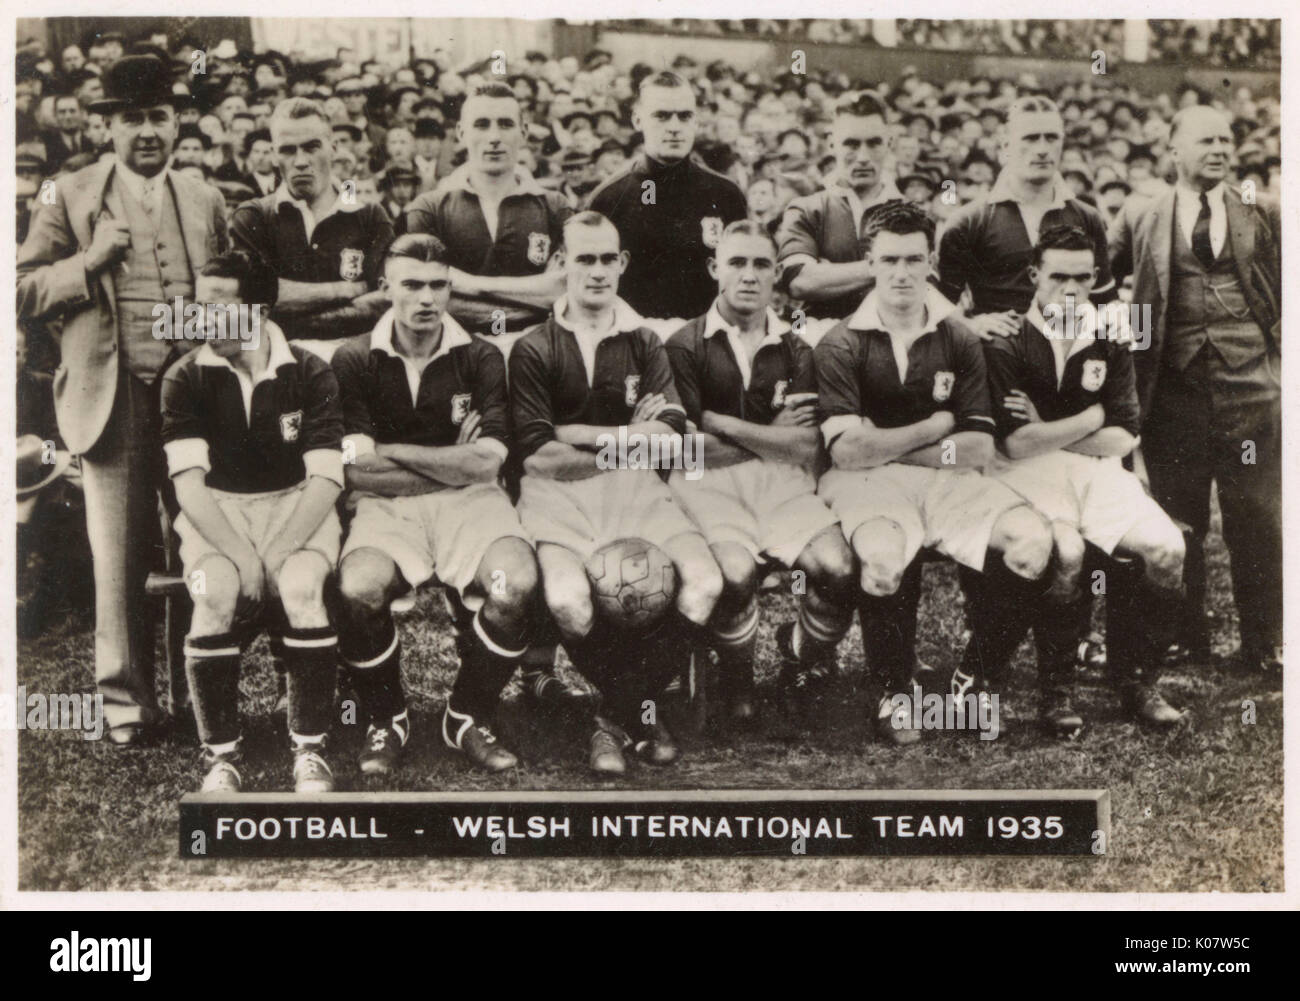 Welsh International FC football team 1935. Back row: John, Lawrence, John, Richards, Phillips. Front row: Murphy, Robbins, Griffiths (Captain), Jones, Glover, Jones.     Date: 1935 Stock Photo